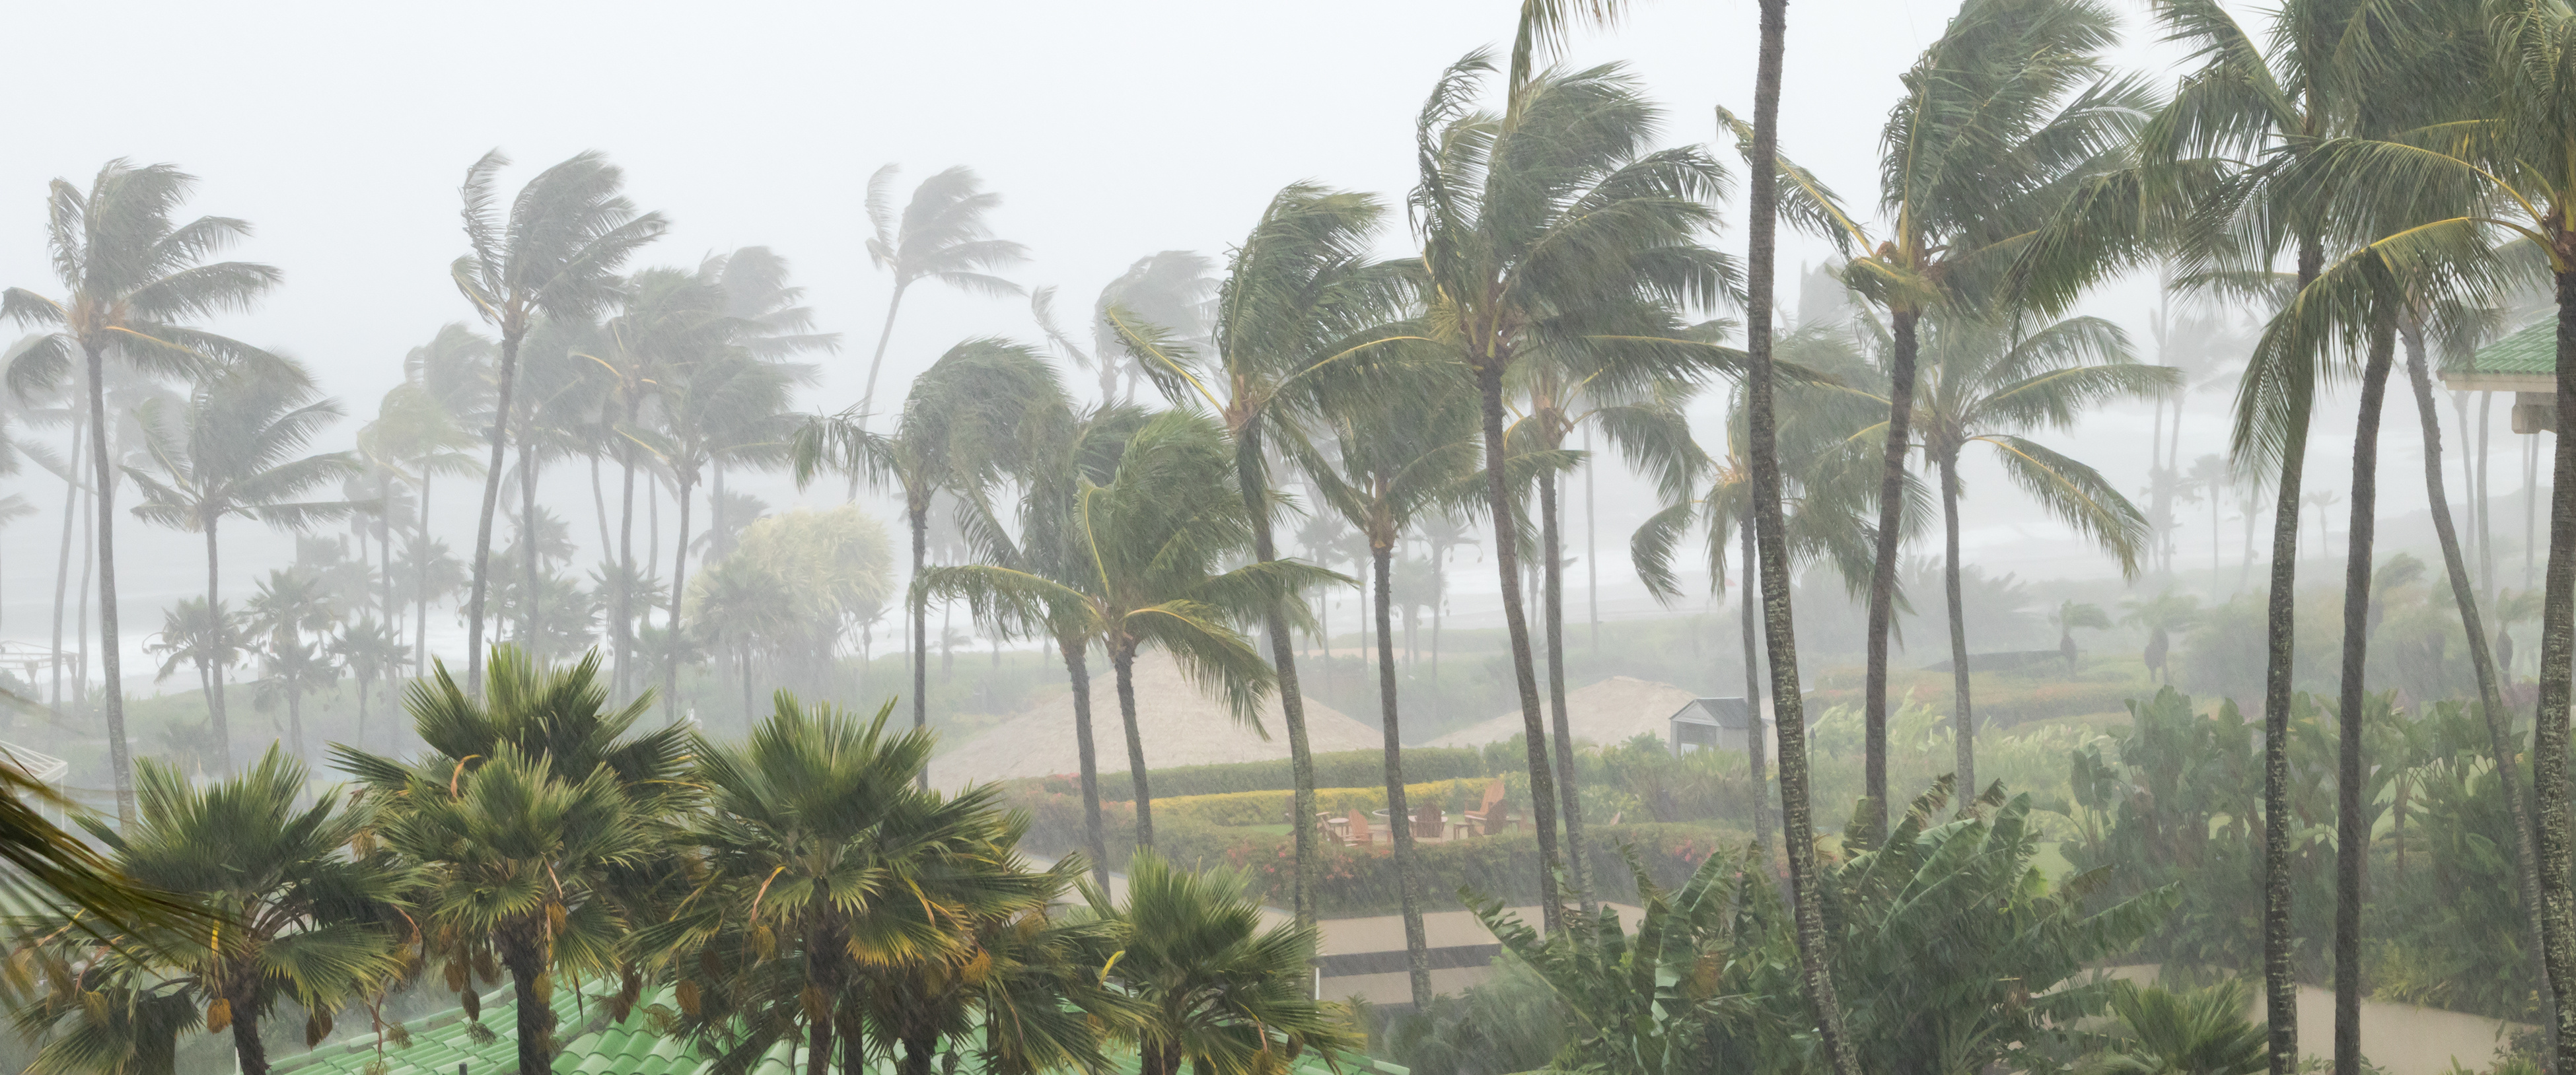 Palm trees in a hurricane coastline